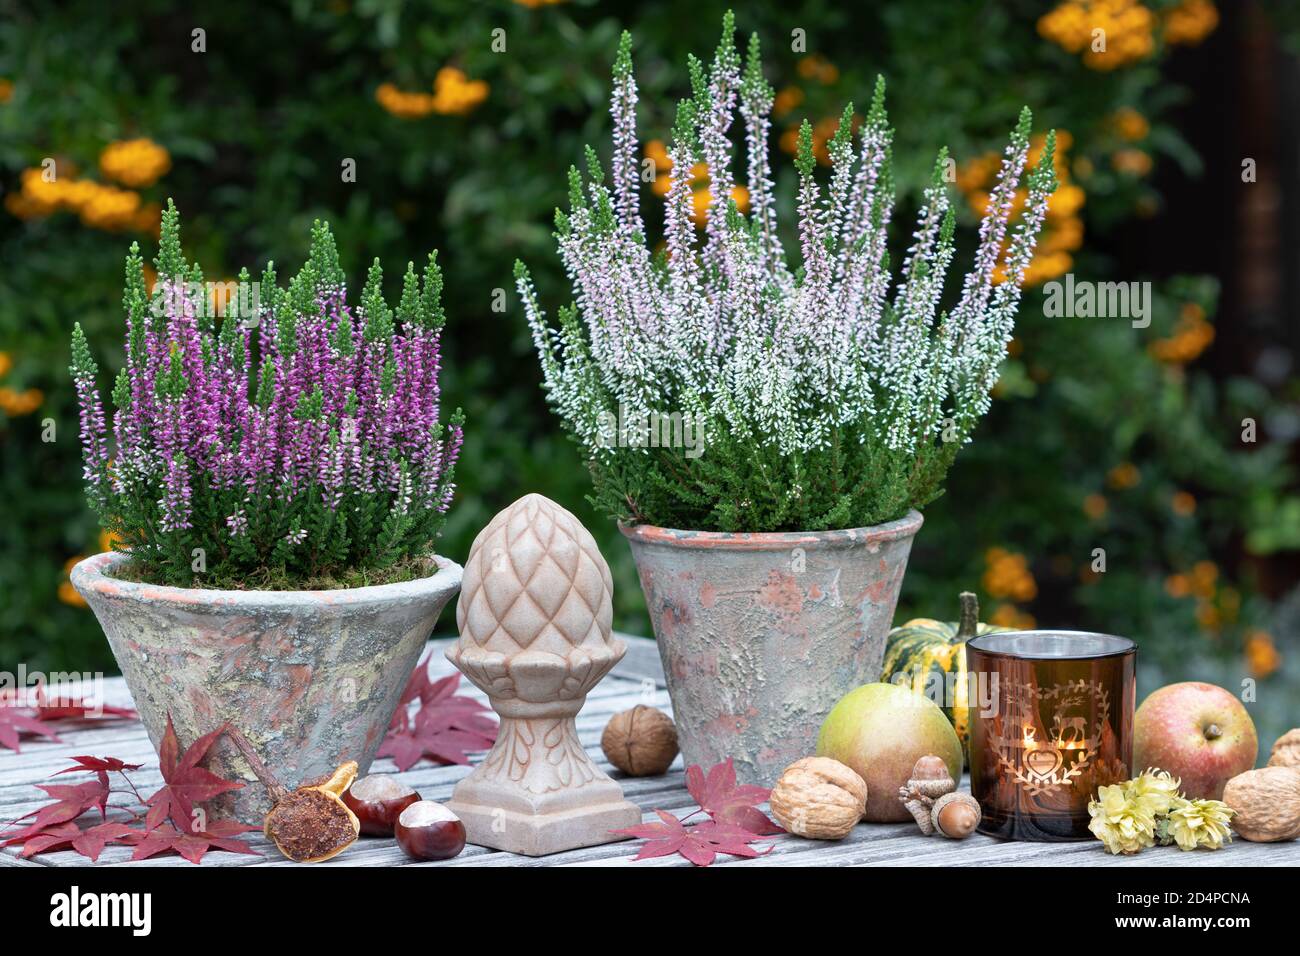 autumn garden decoration with heather flowers in terracotta pots Stock Photo